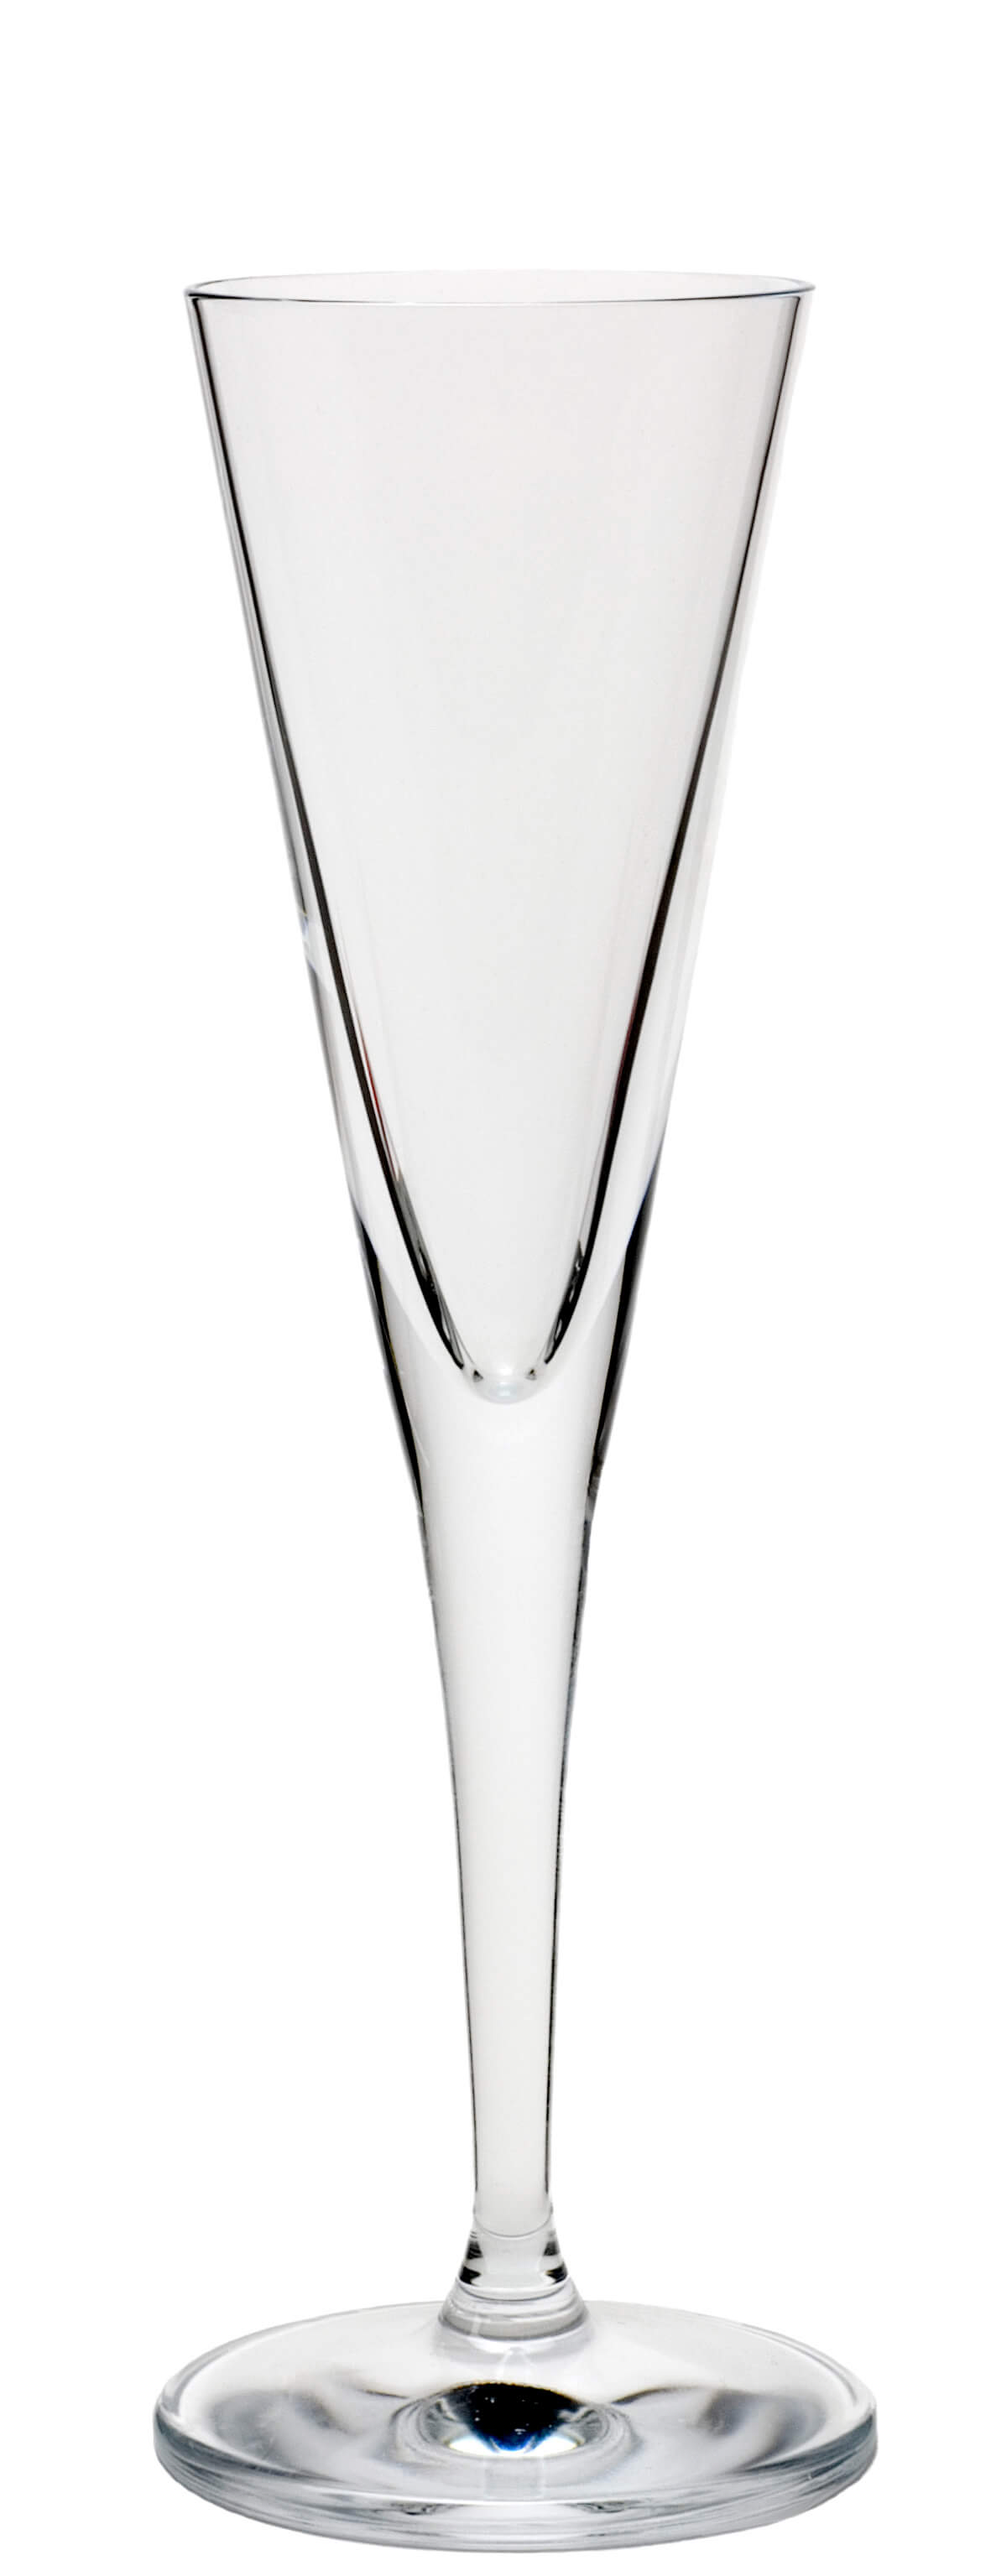 Aquavitglas aus der Serie 